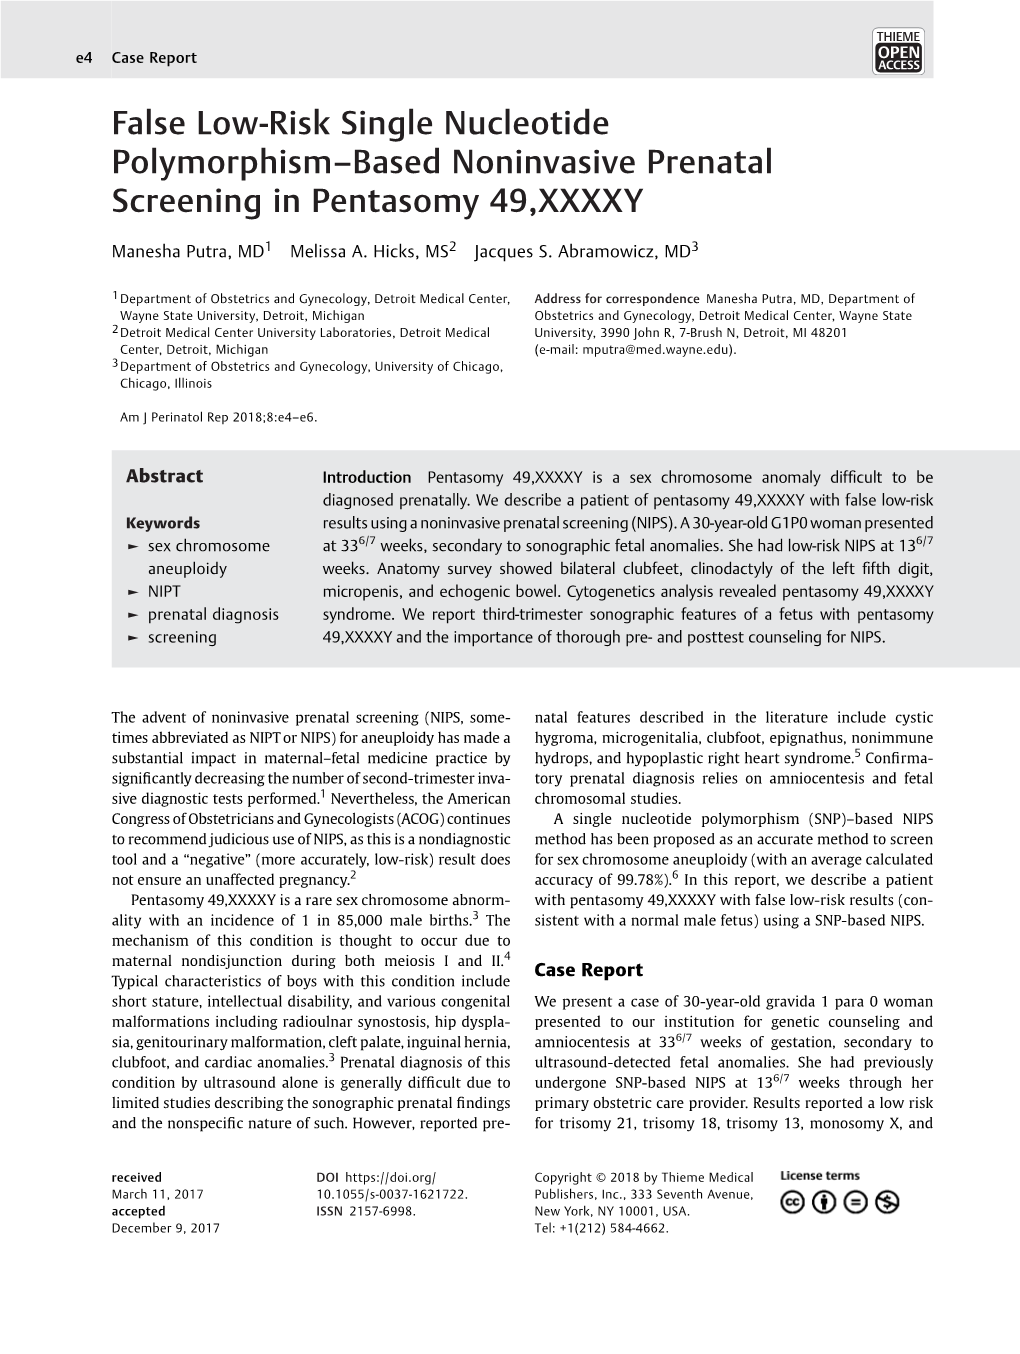 False Low-Risk Single Nucleotide Polymorphism–Based Noninvasive Prenatal Screening in Pentasomy 49,XXXXY